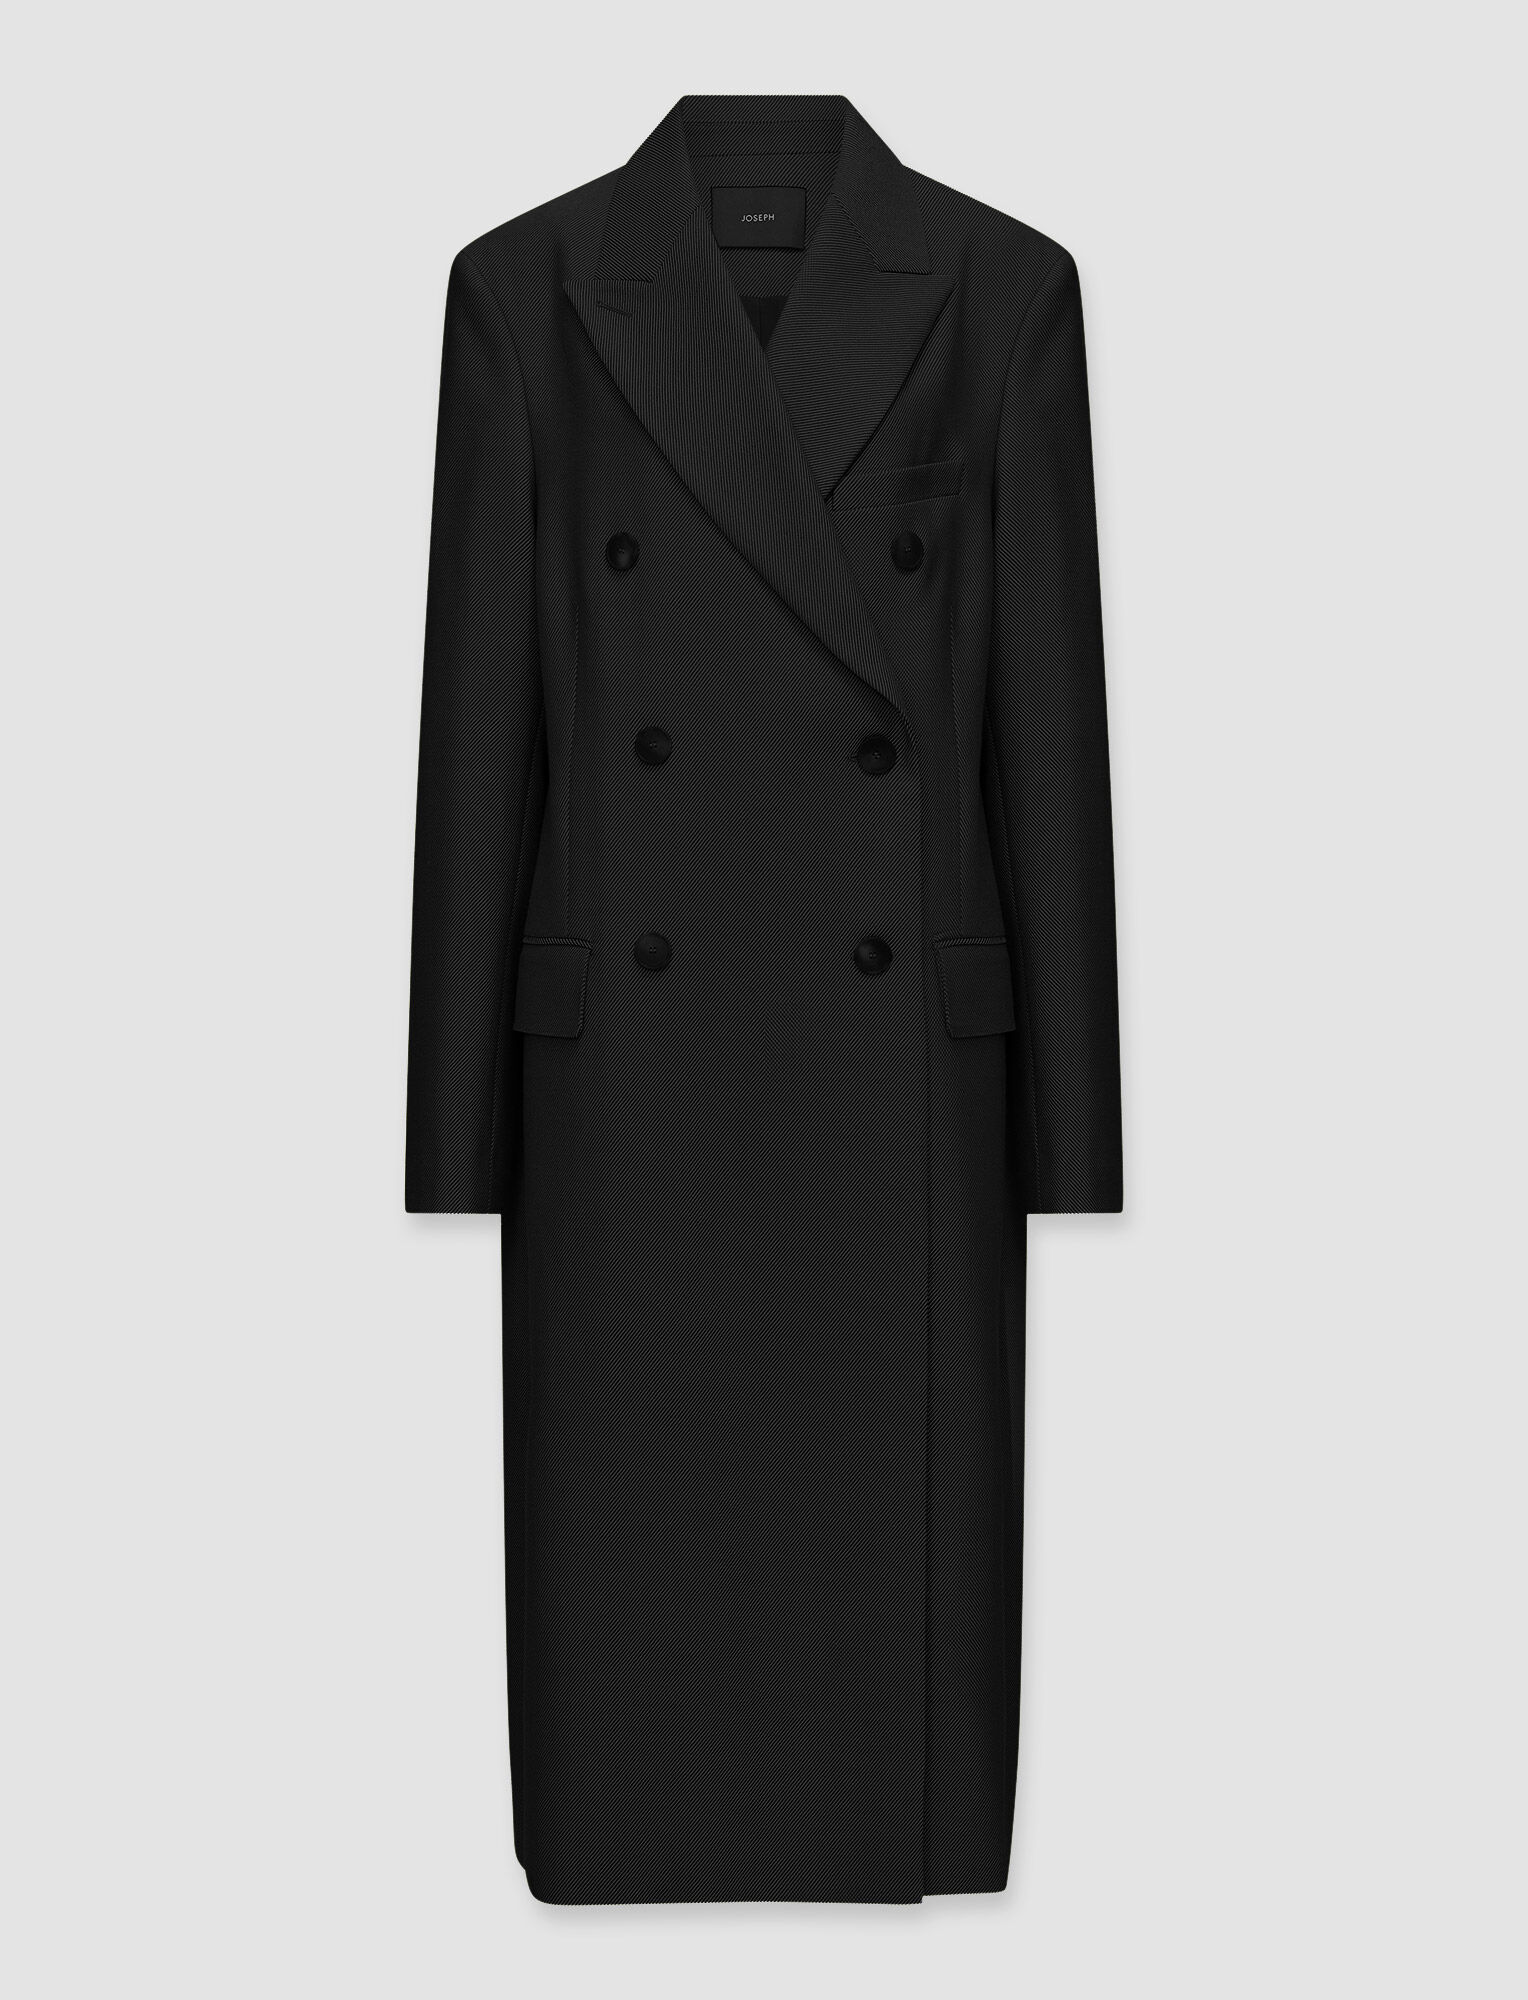 Joseph, Fluid Wool Melange Cornwall Coat, in Black